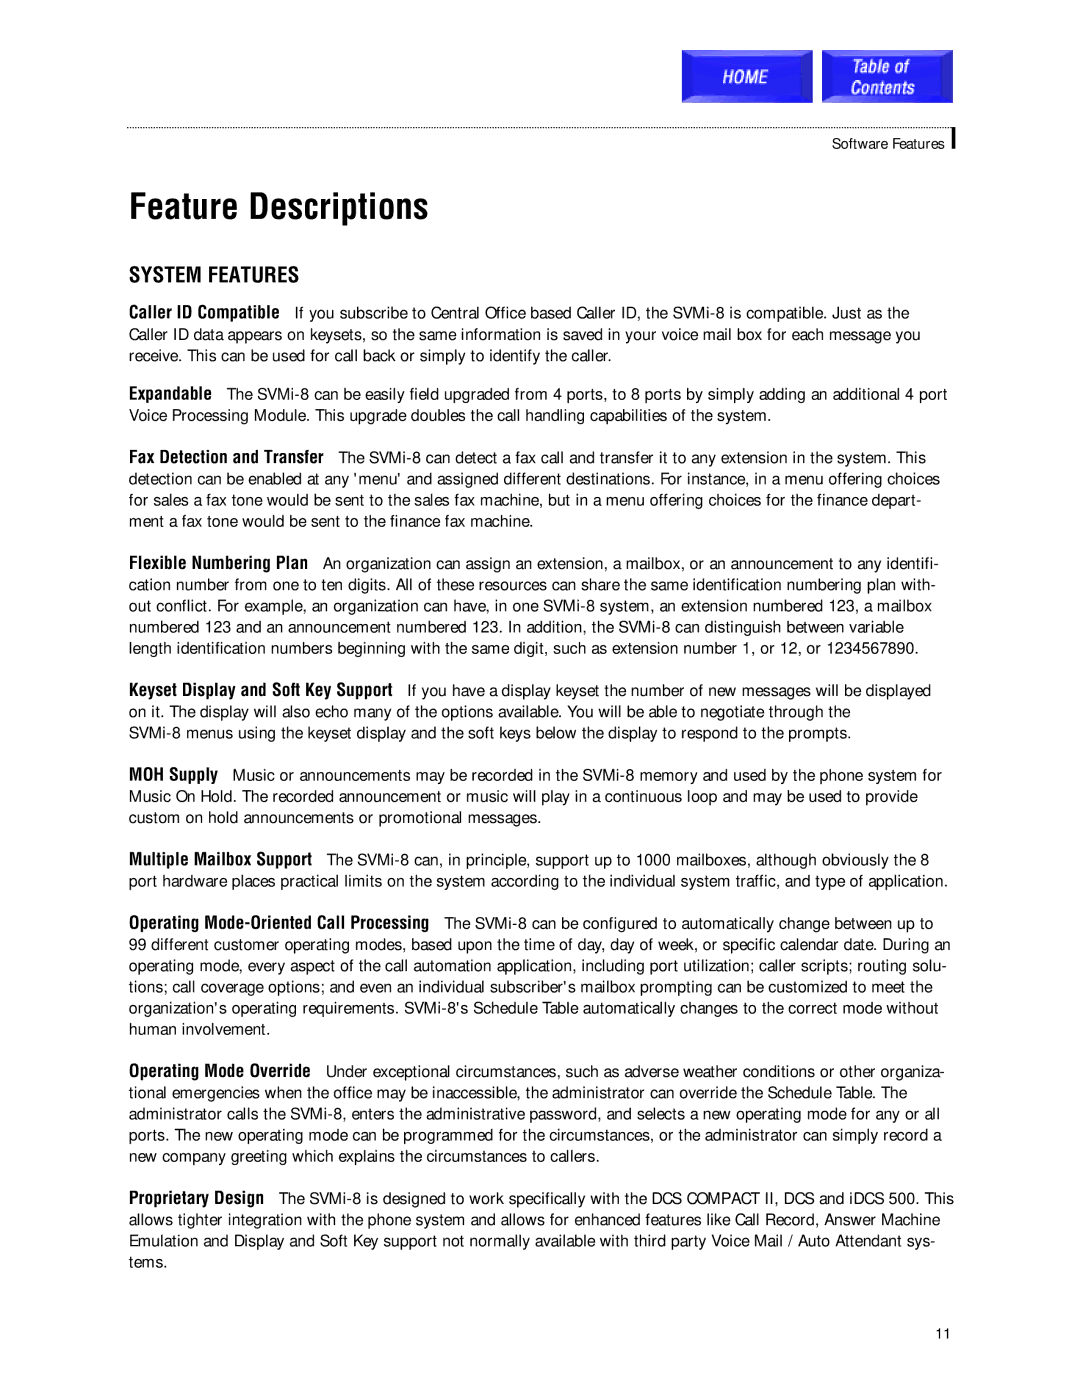 Samsung SVMi-8 technical manual Feature Descriptions, System Features 